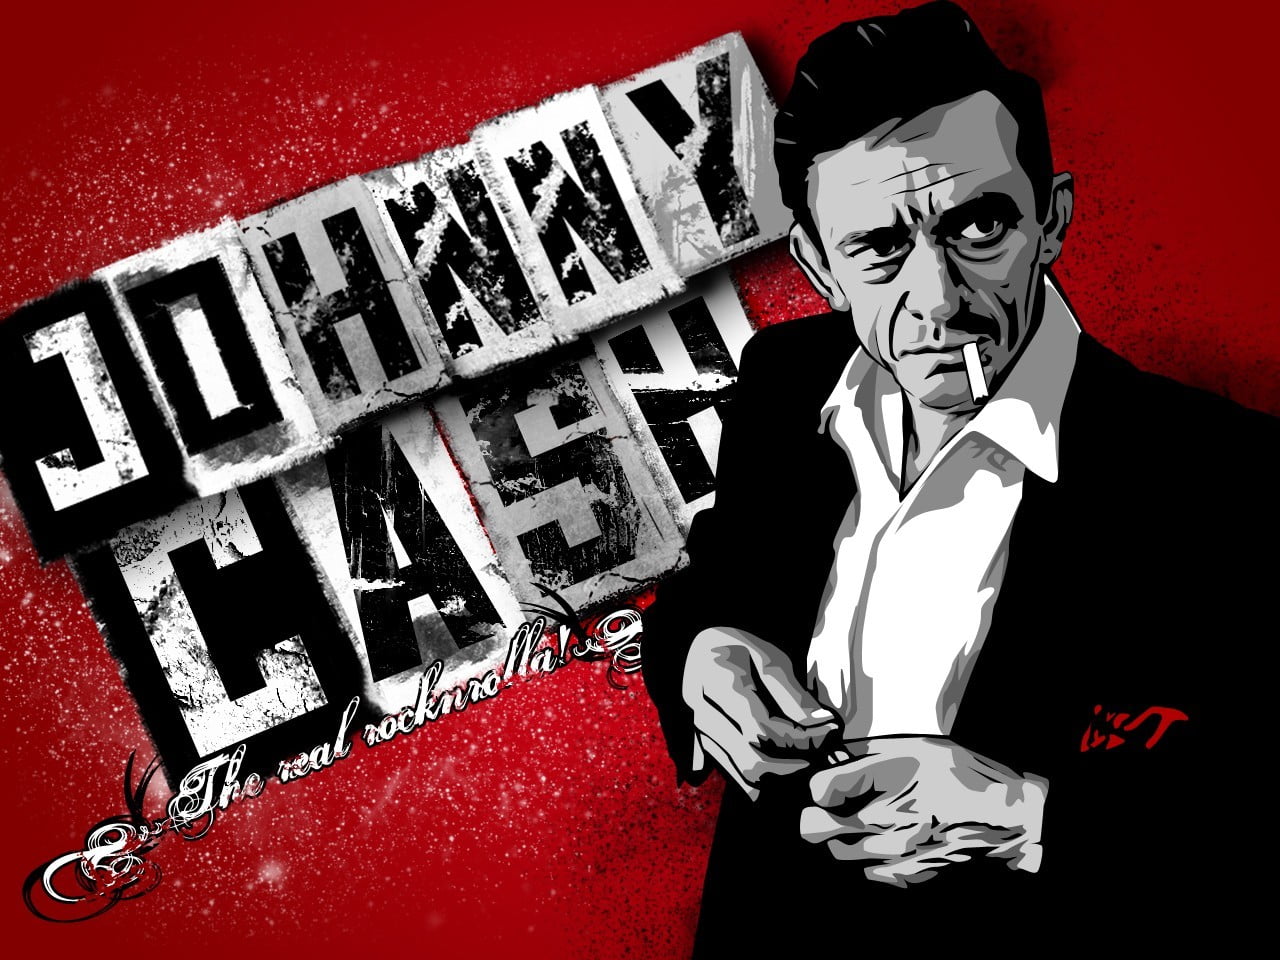 music, Johnny Cash, cigarettes, red, one person, celebration